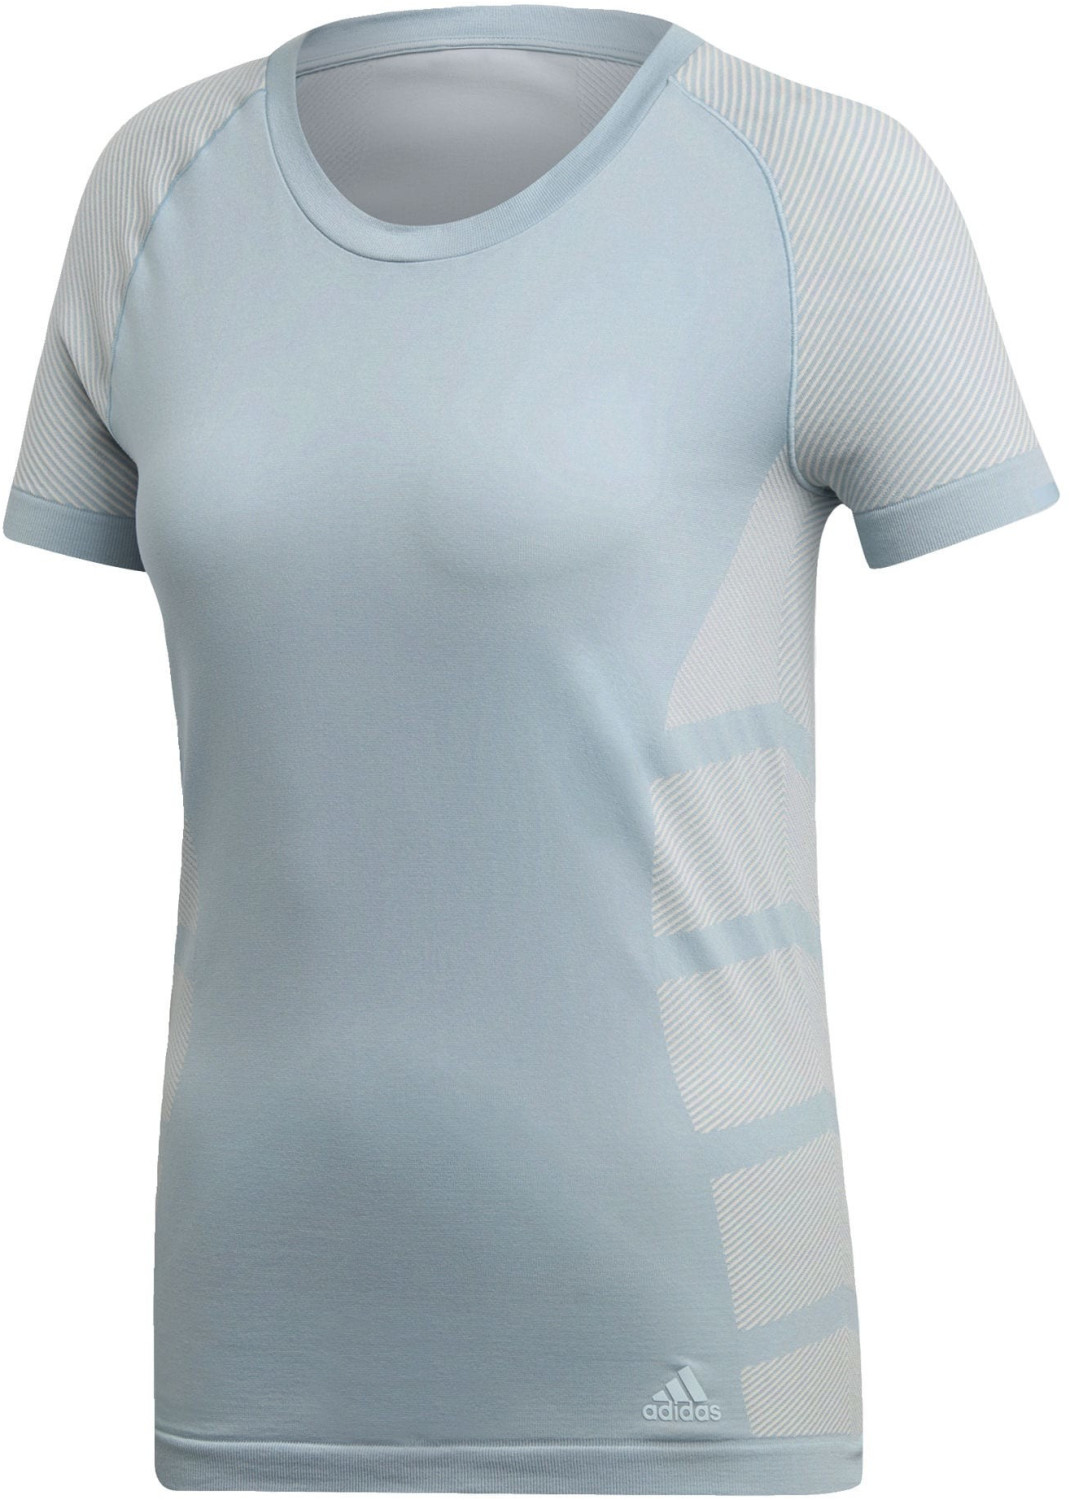 Adidas Women Running Primeknit Cru T-Shirt (DS8836) ash grey